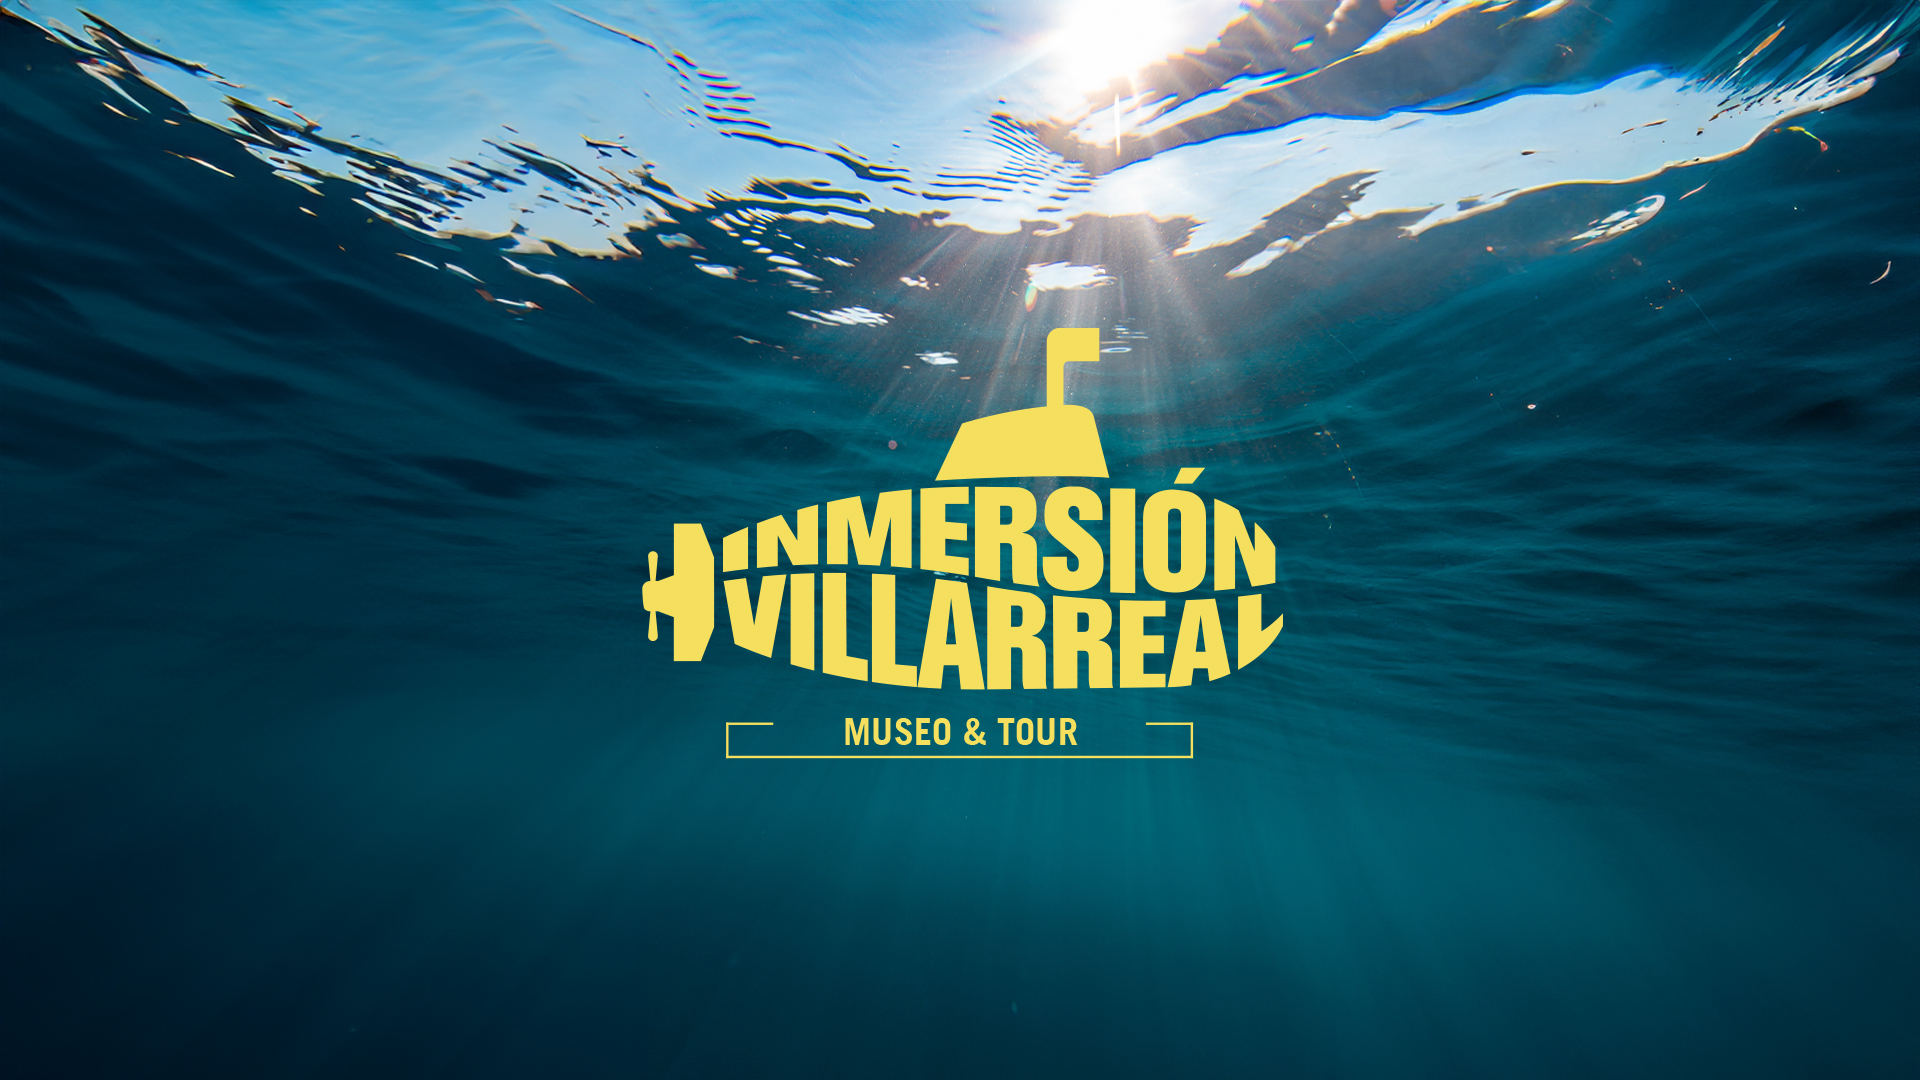 Inmersion Villarreal 1920x1080 2